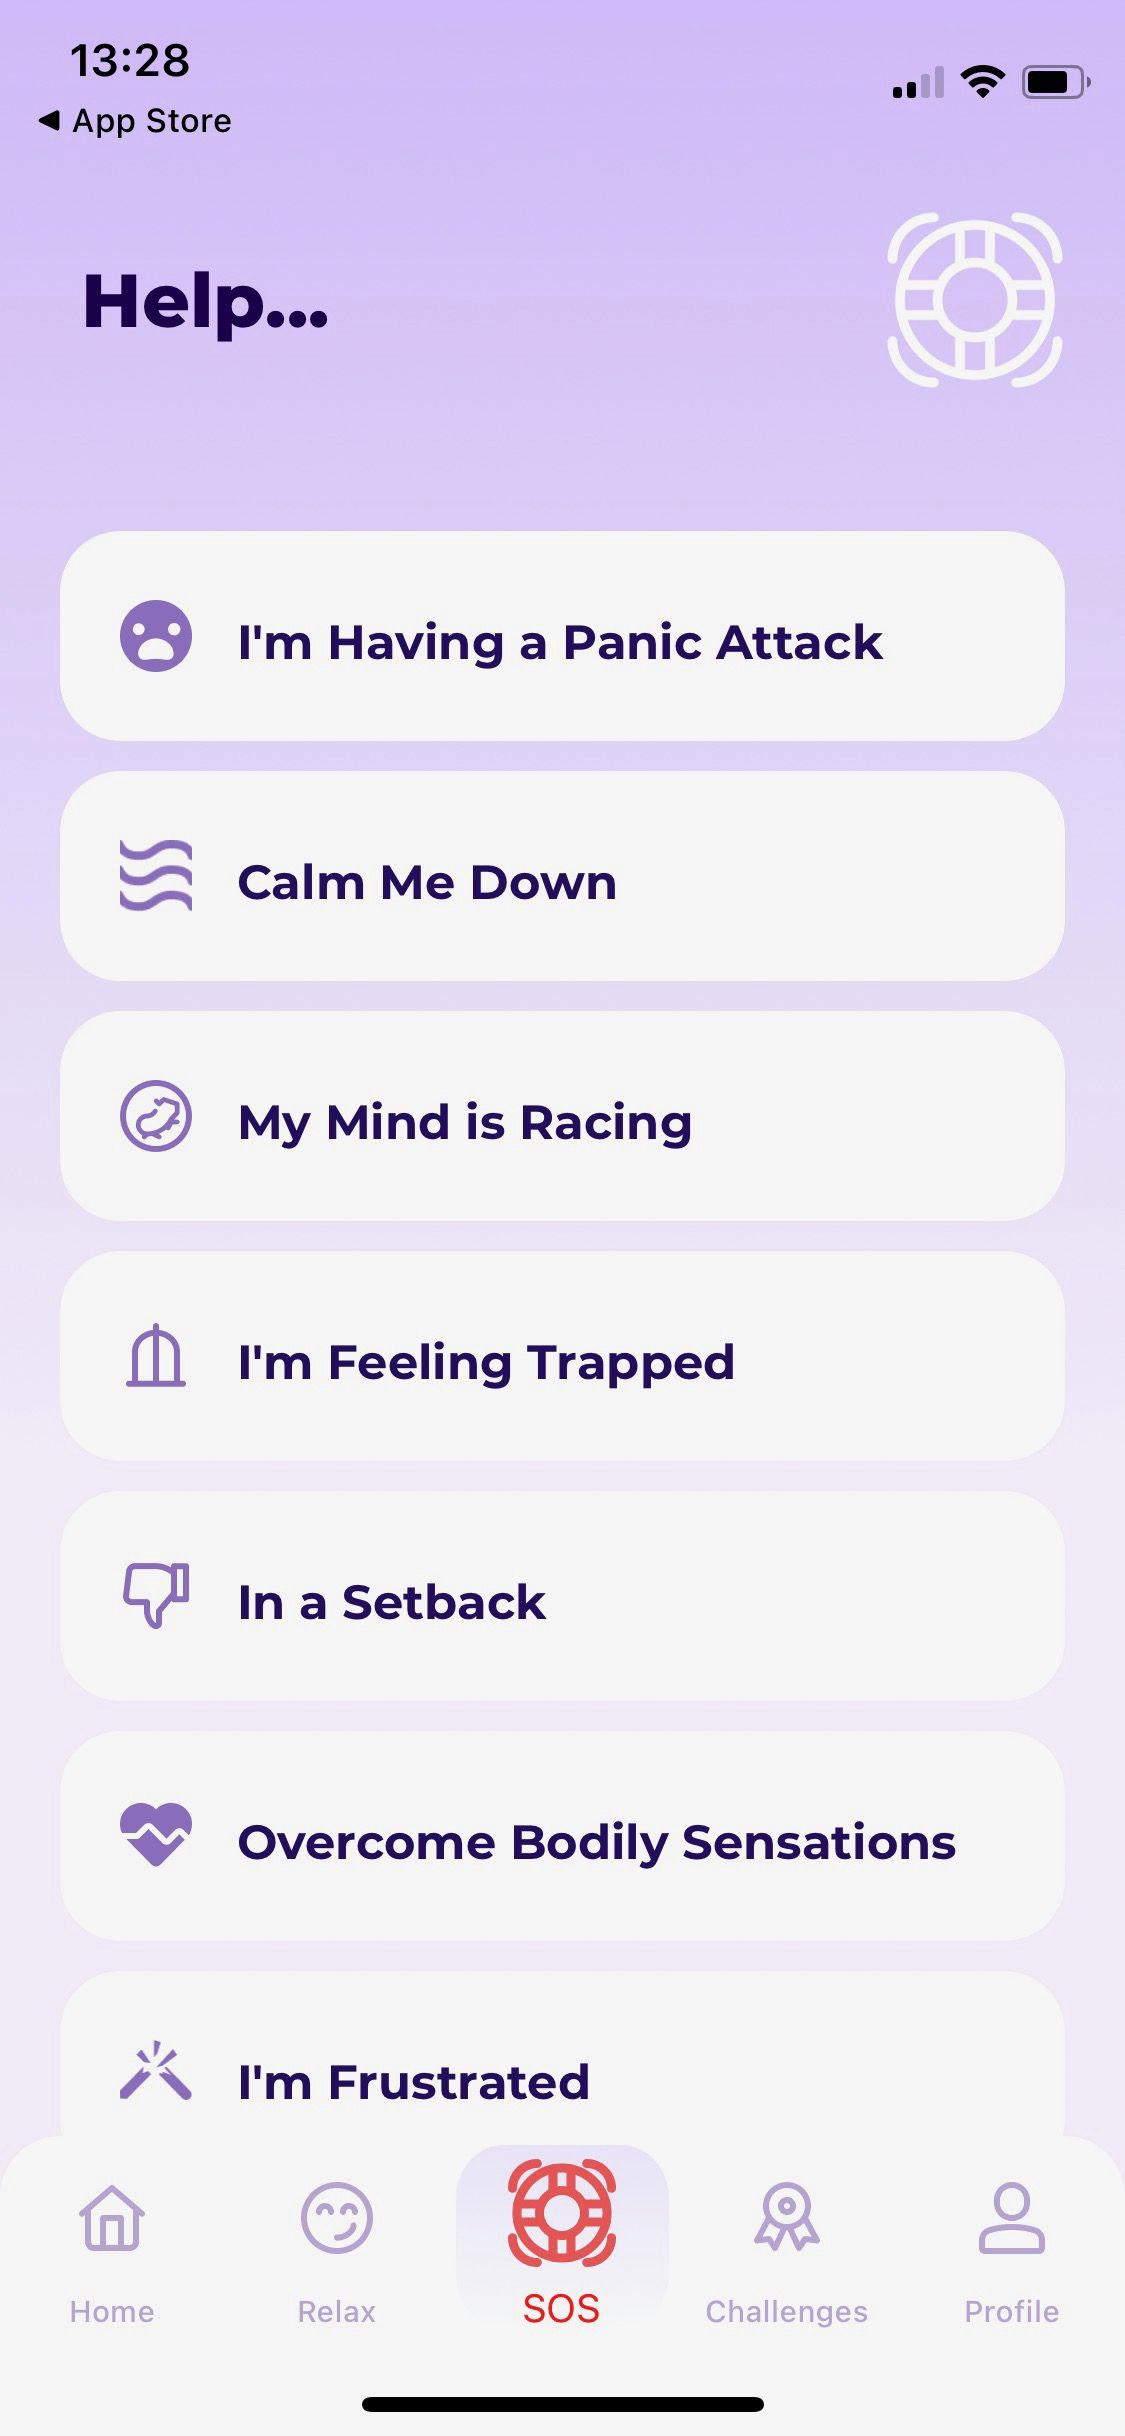 Screenshot of Dare app showing help options